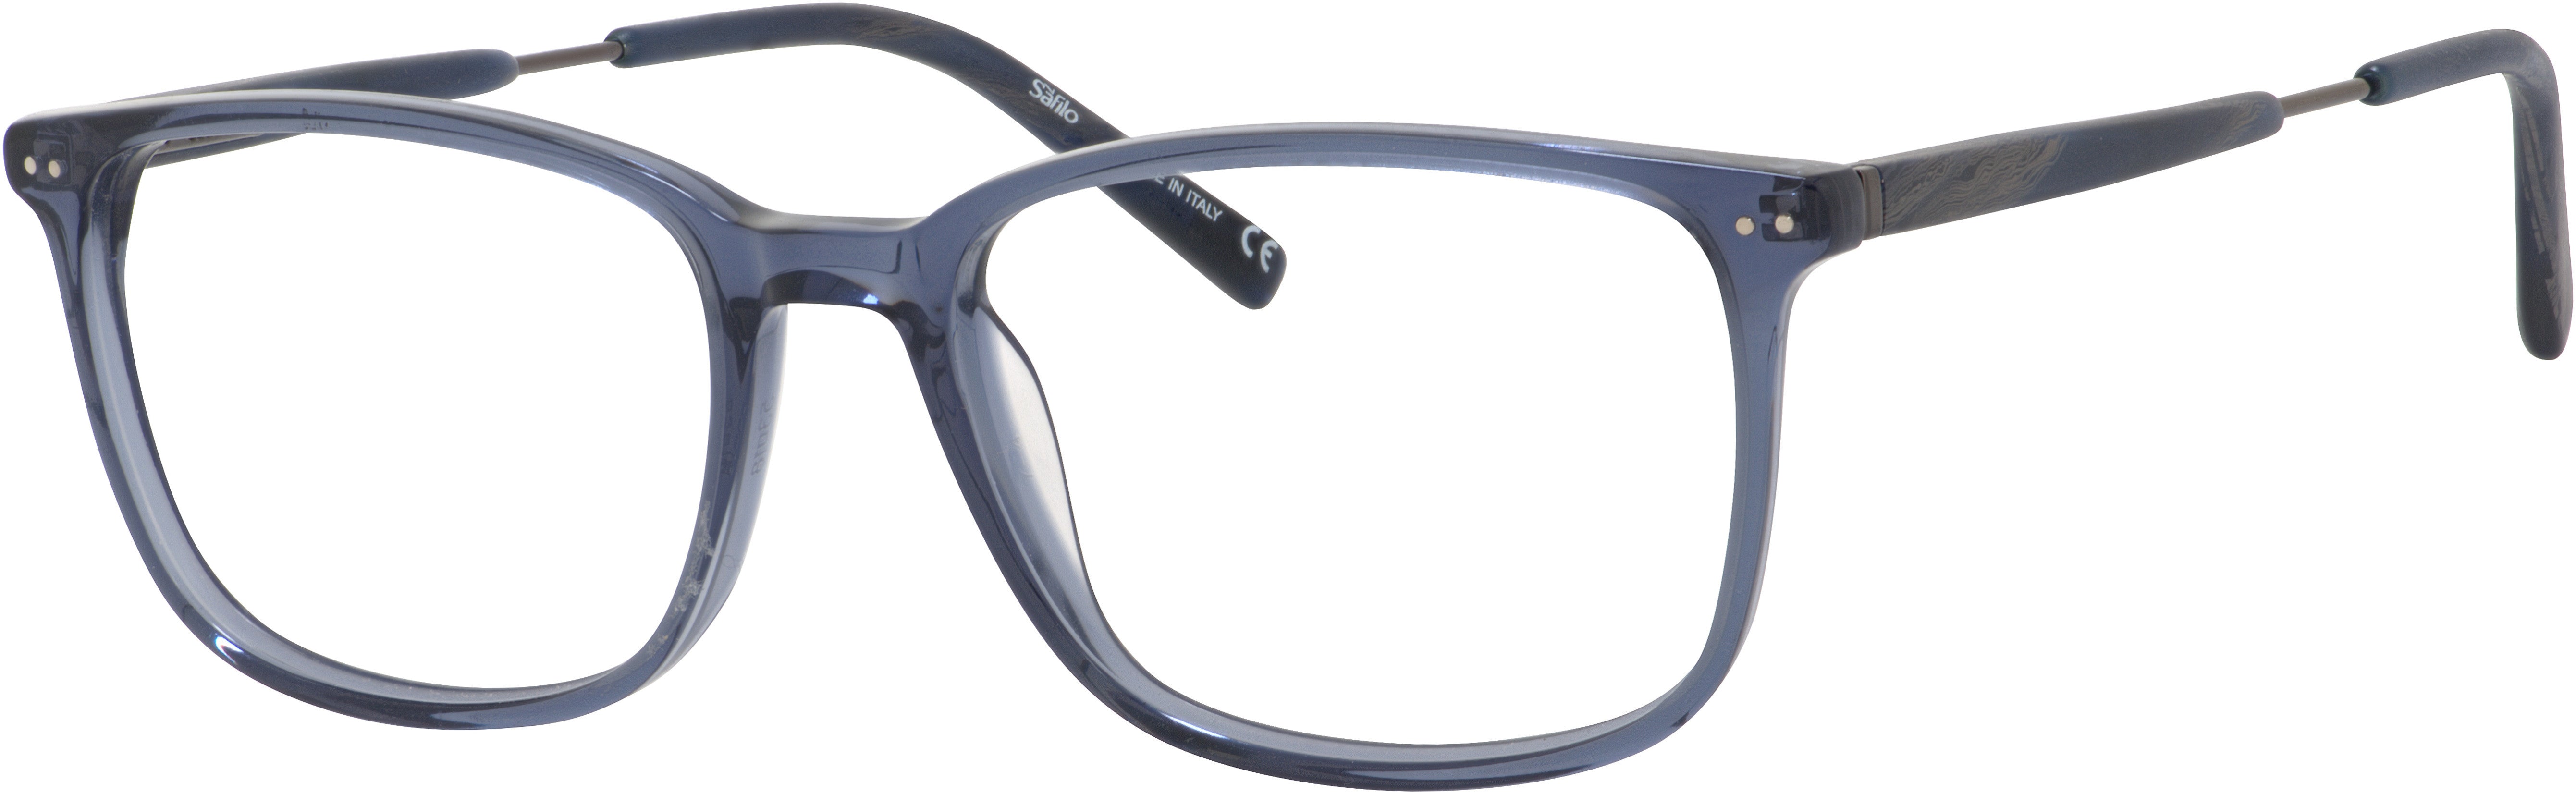  Elasta 1642 Rectangular Eyeglasses 0XW0-0XW0  Blue Gray (00 Demo Lens)